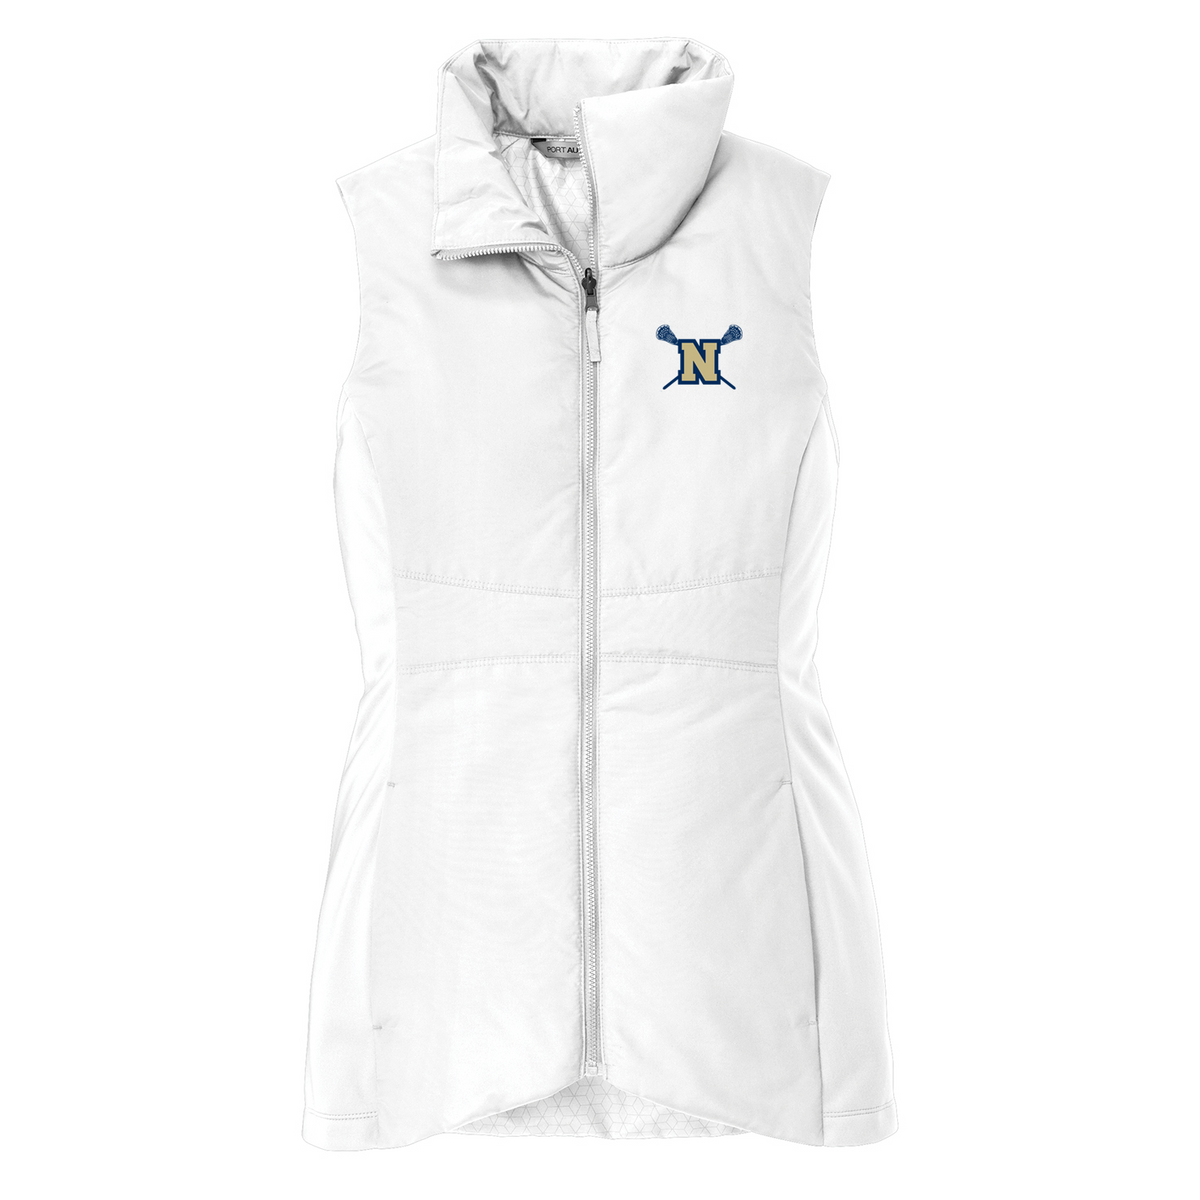 Newington High School Lacrosse Women's Vest